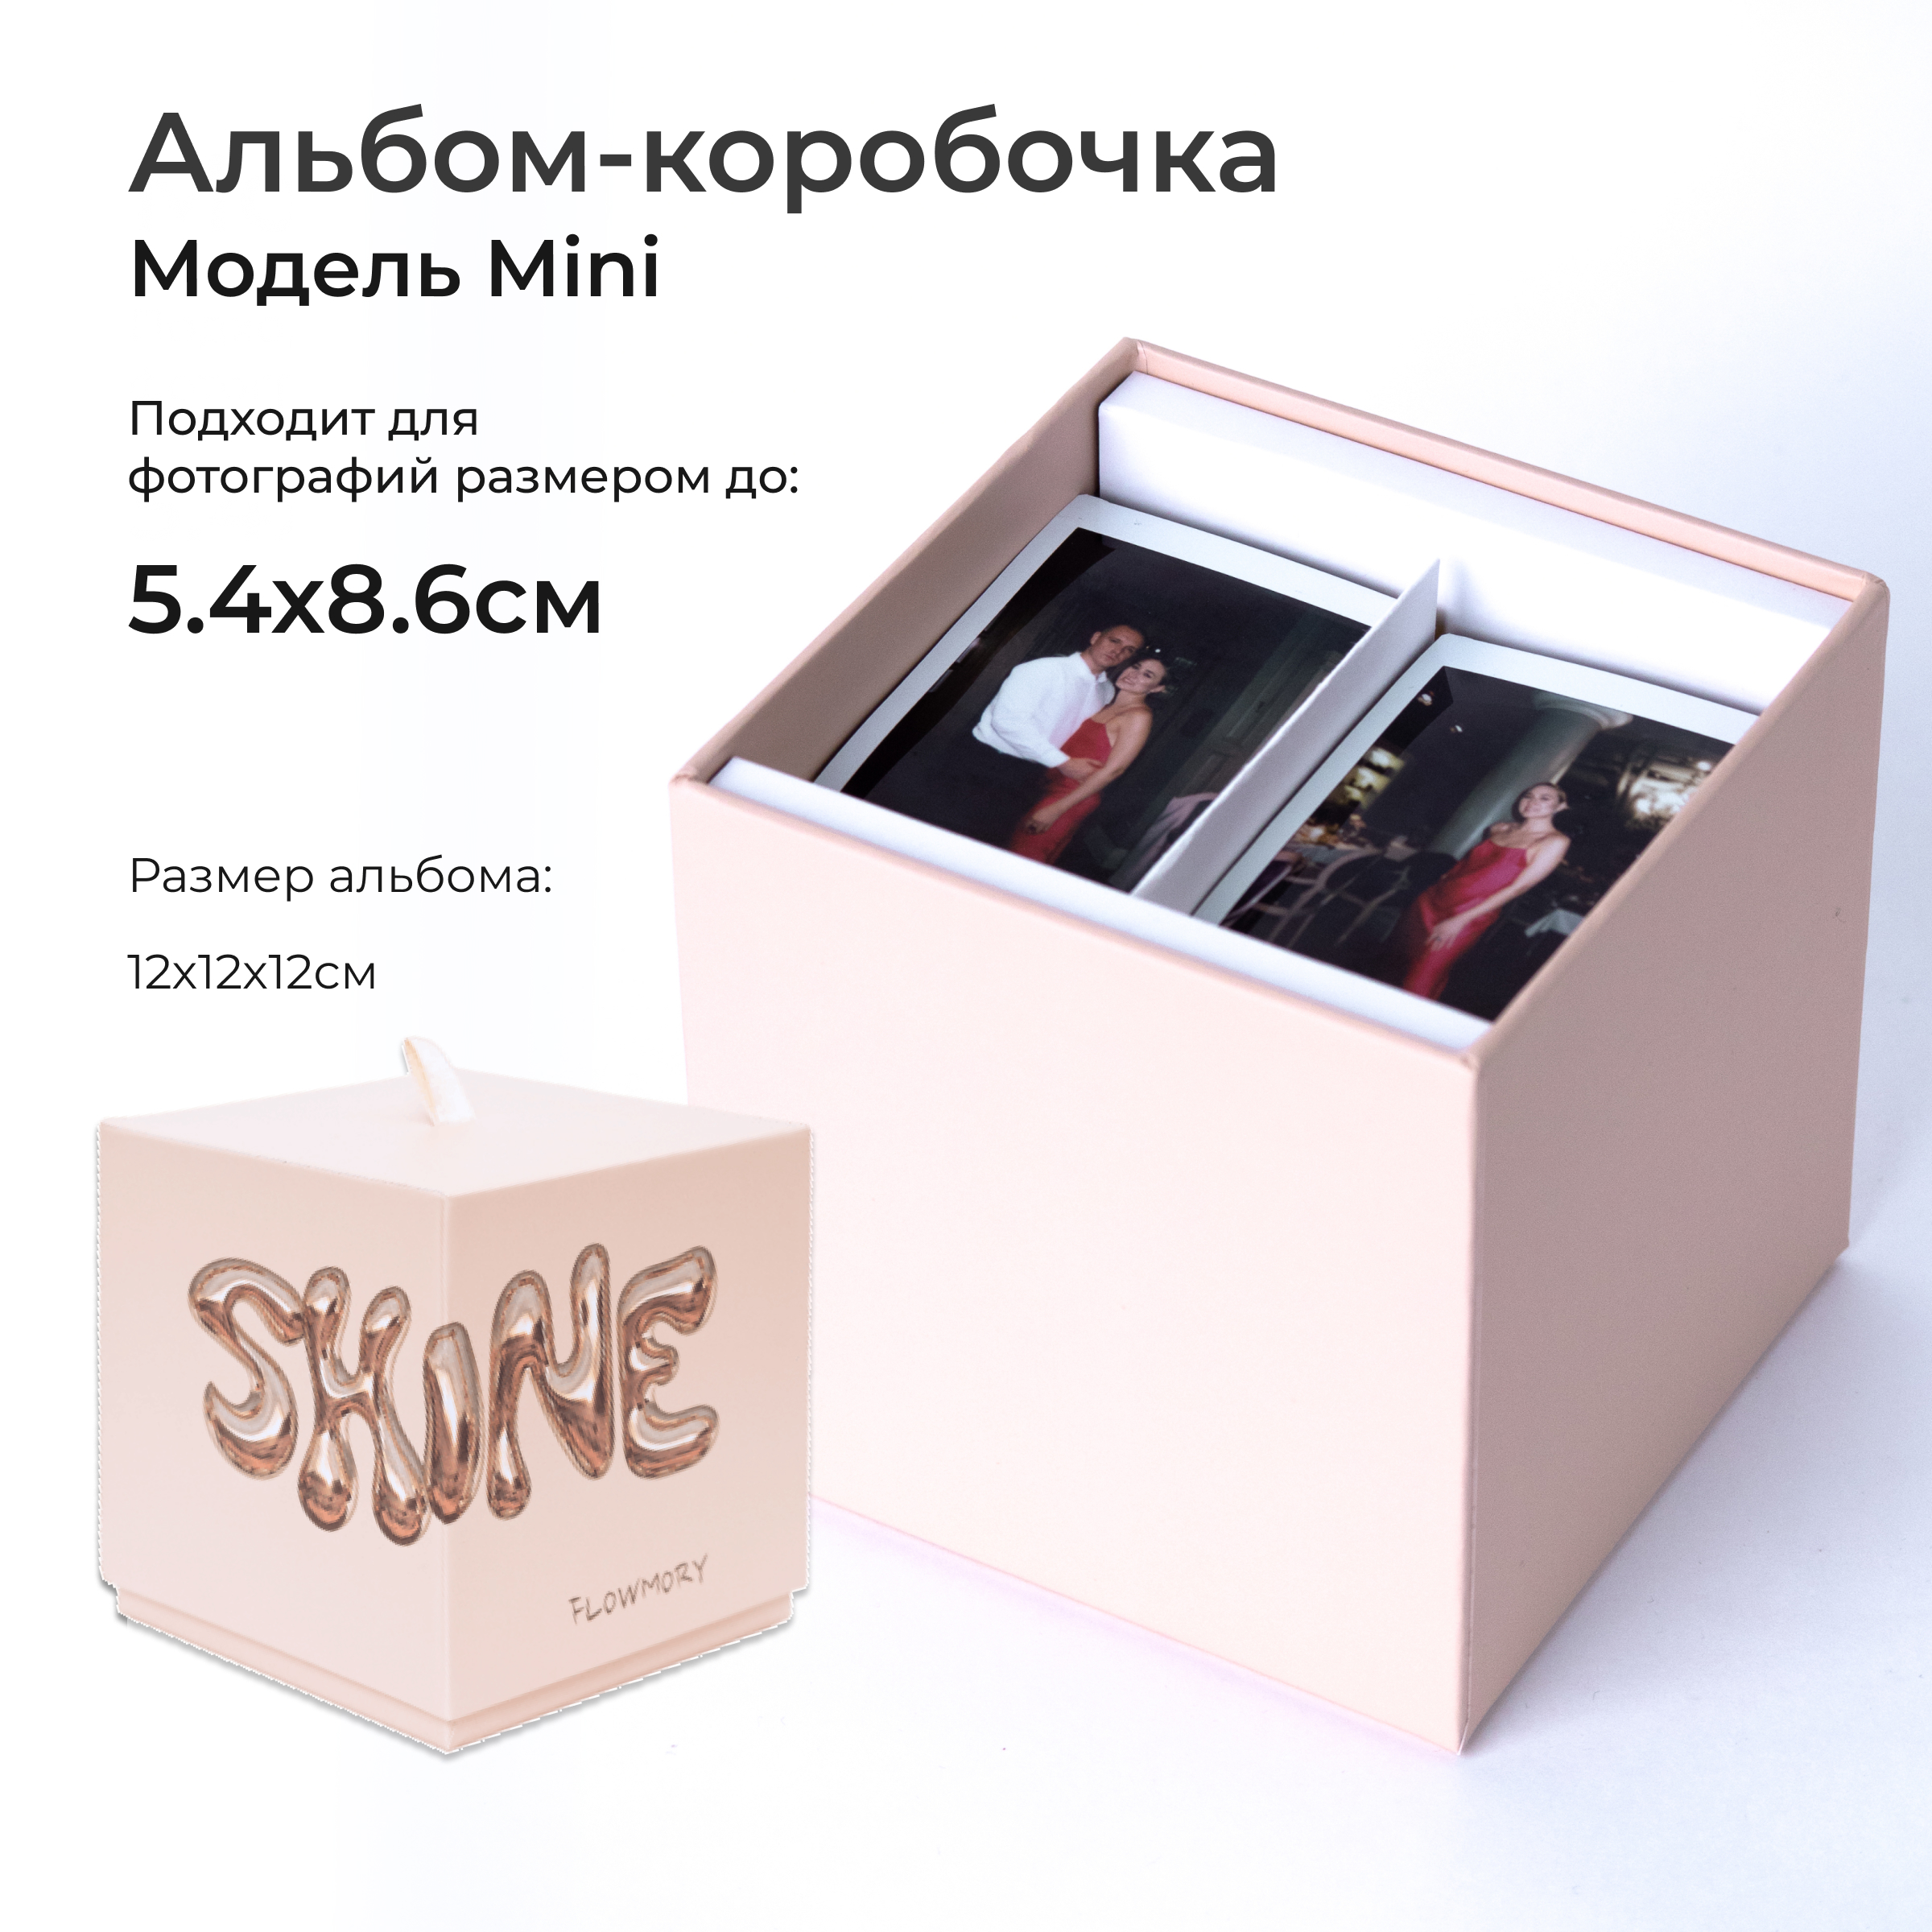 Фотоальбом FLOWMORY SHINE wide коробочка для instax и polaroid фотографий